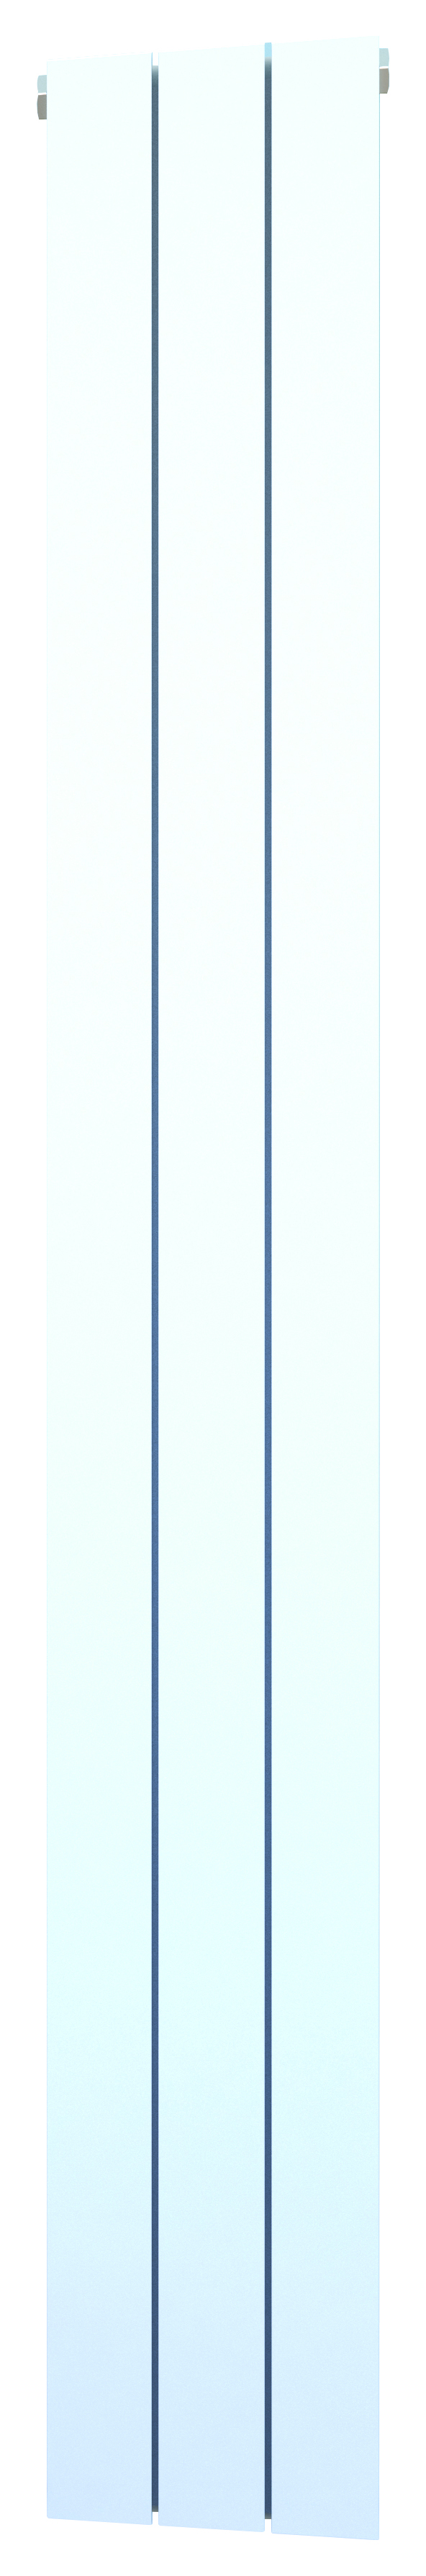 Image of Towelrads White Hanworth Vertical Designer Radiator - 1800 x 320mm